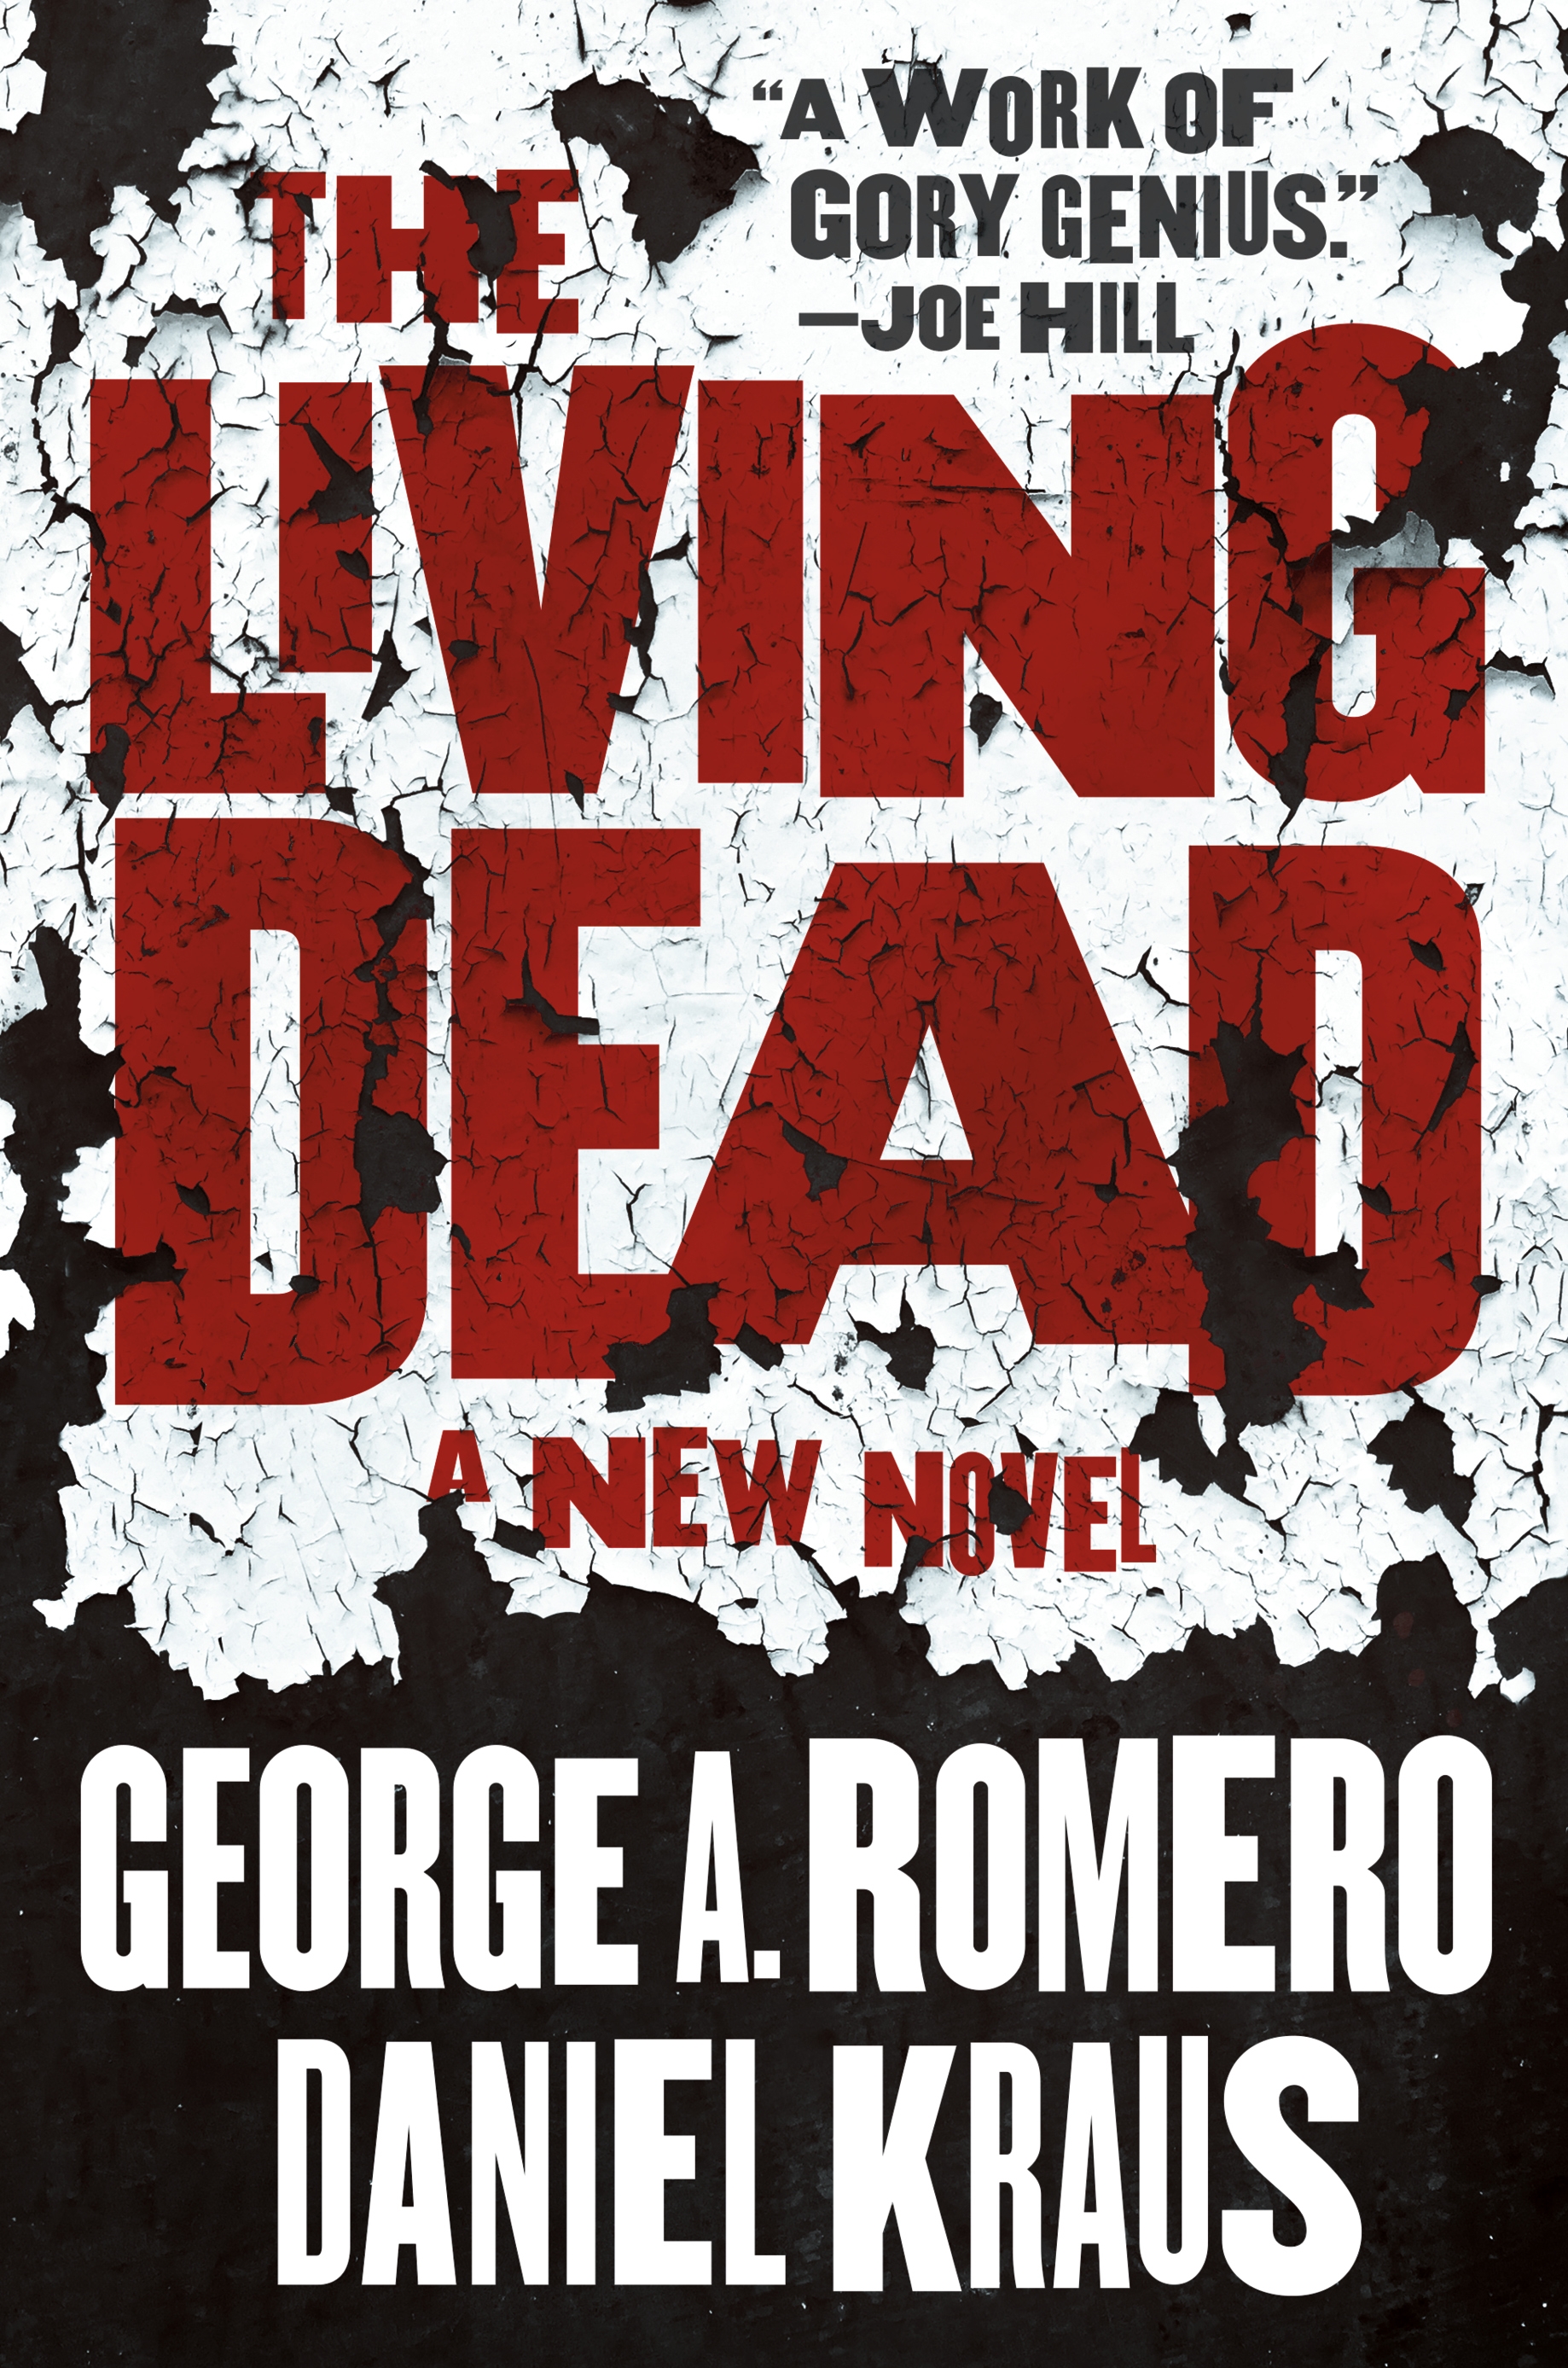 The Living Dead by George A. Romero, Daniel Kraus